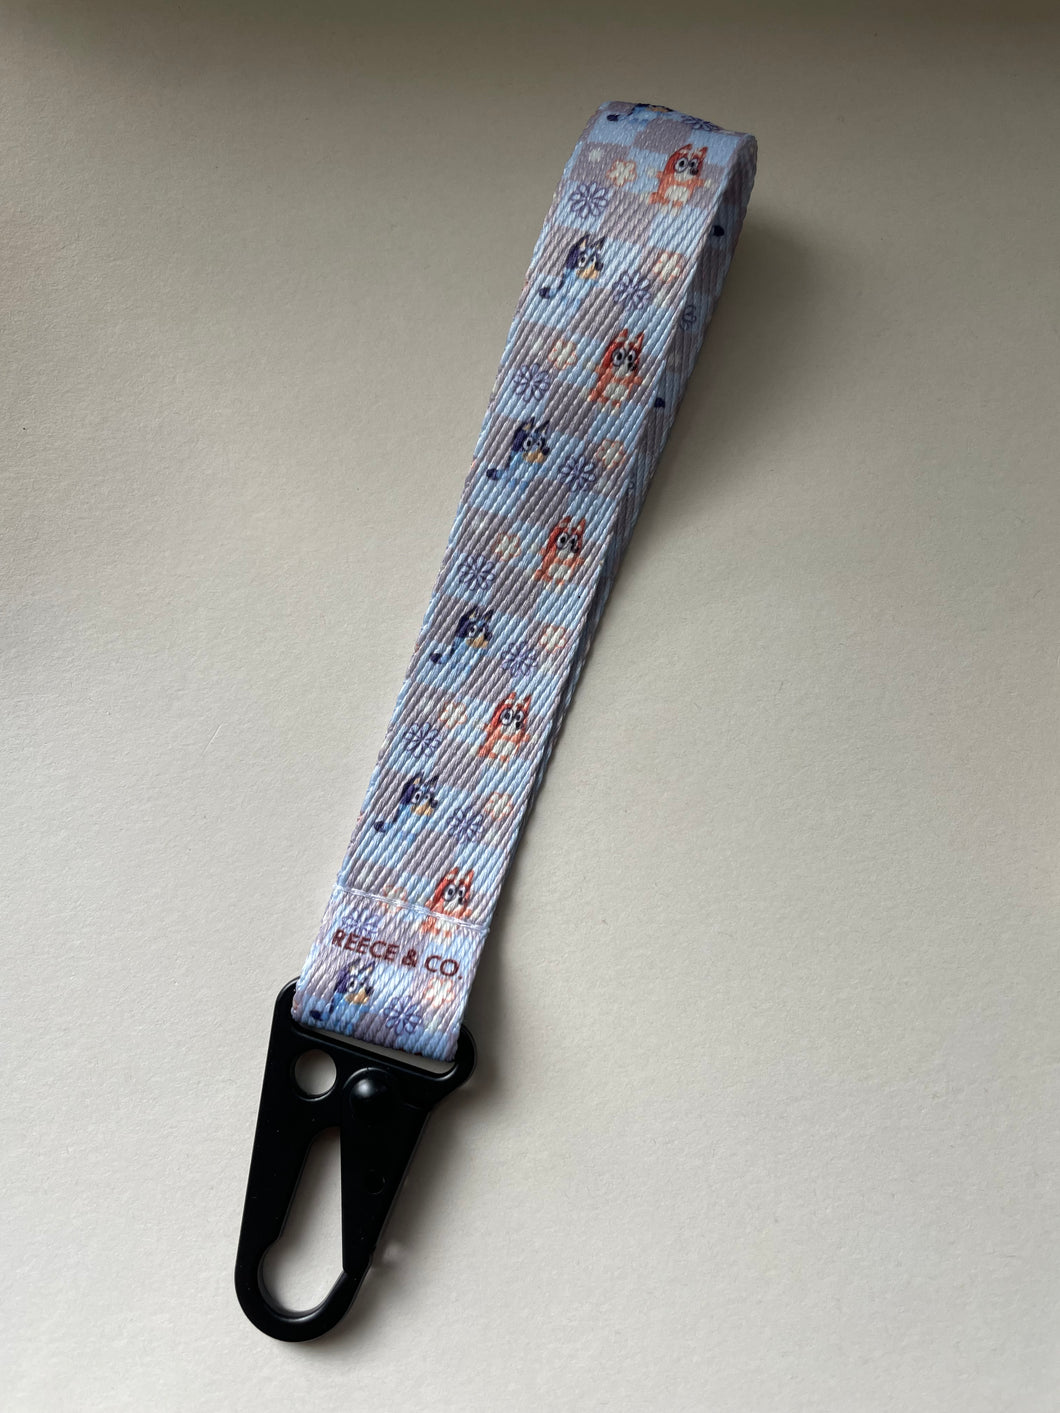 Blue dog/ orange dog key strap